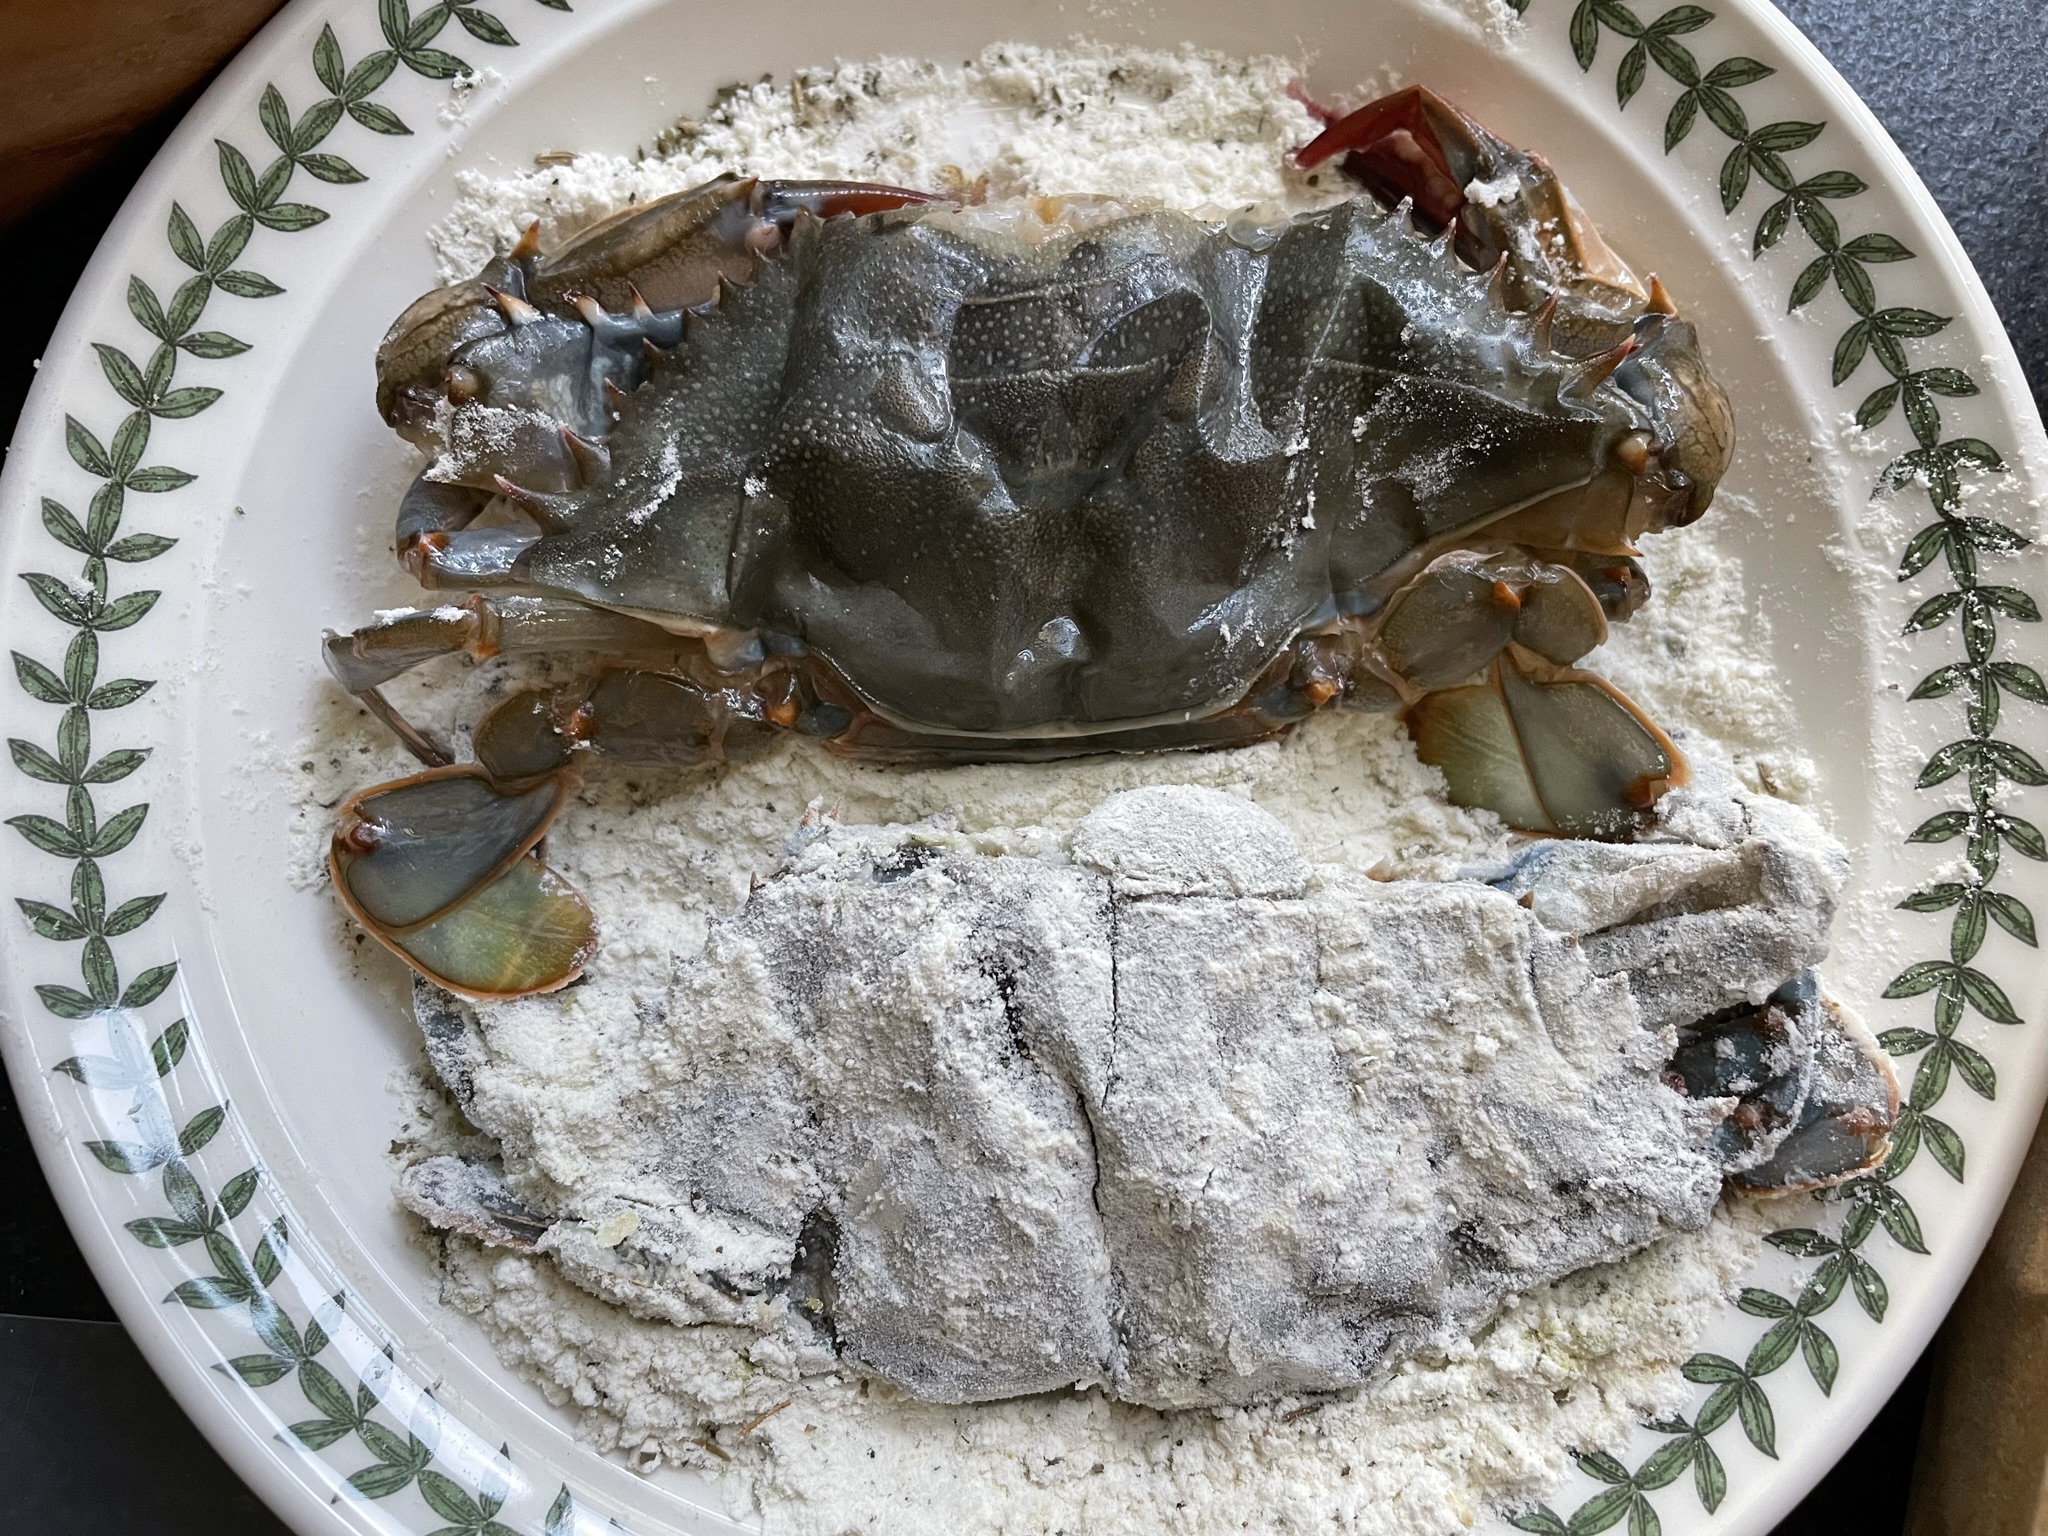 Dredge softshell crab in flour mixture